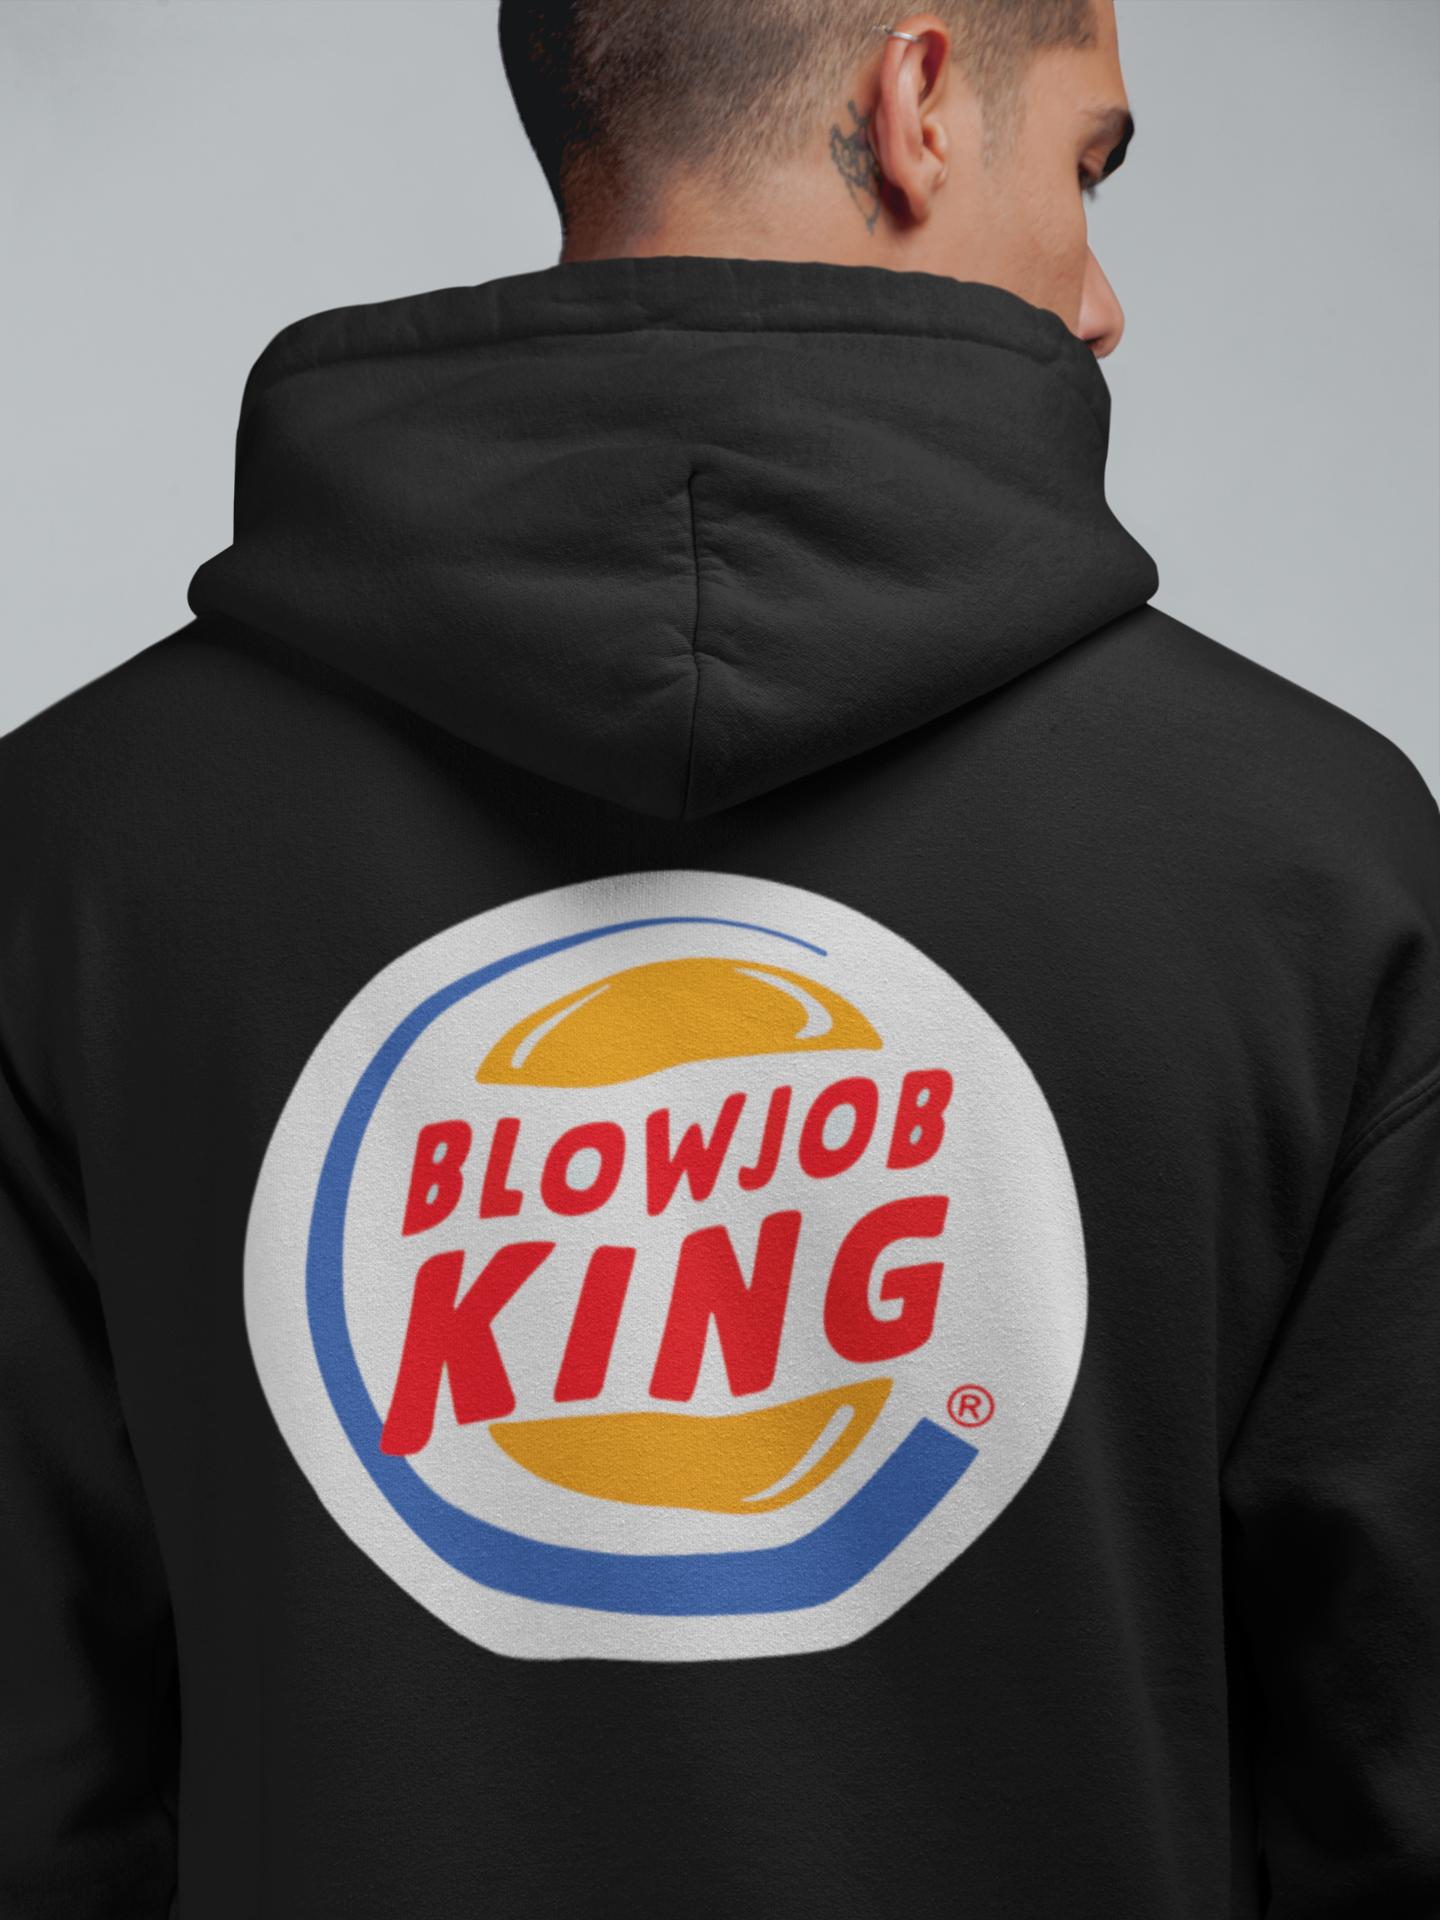 Blowjob King Shirt, Hoodie